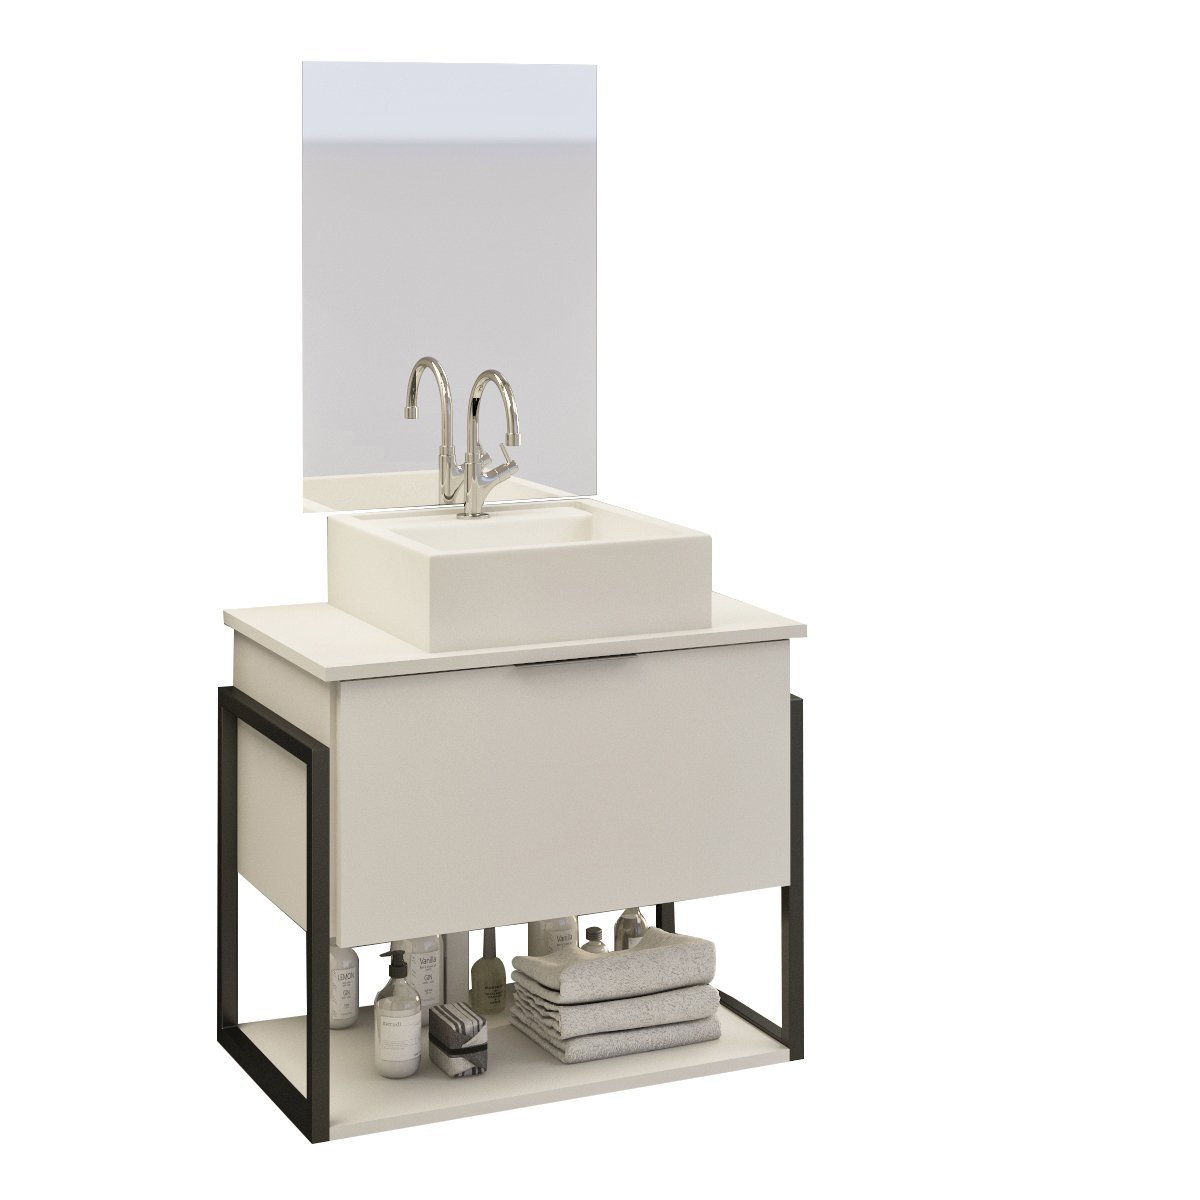 Kit Gabinete Banheiro Completo Industrial Tech 60cm Branco - Cuba Branca - 3